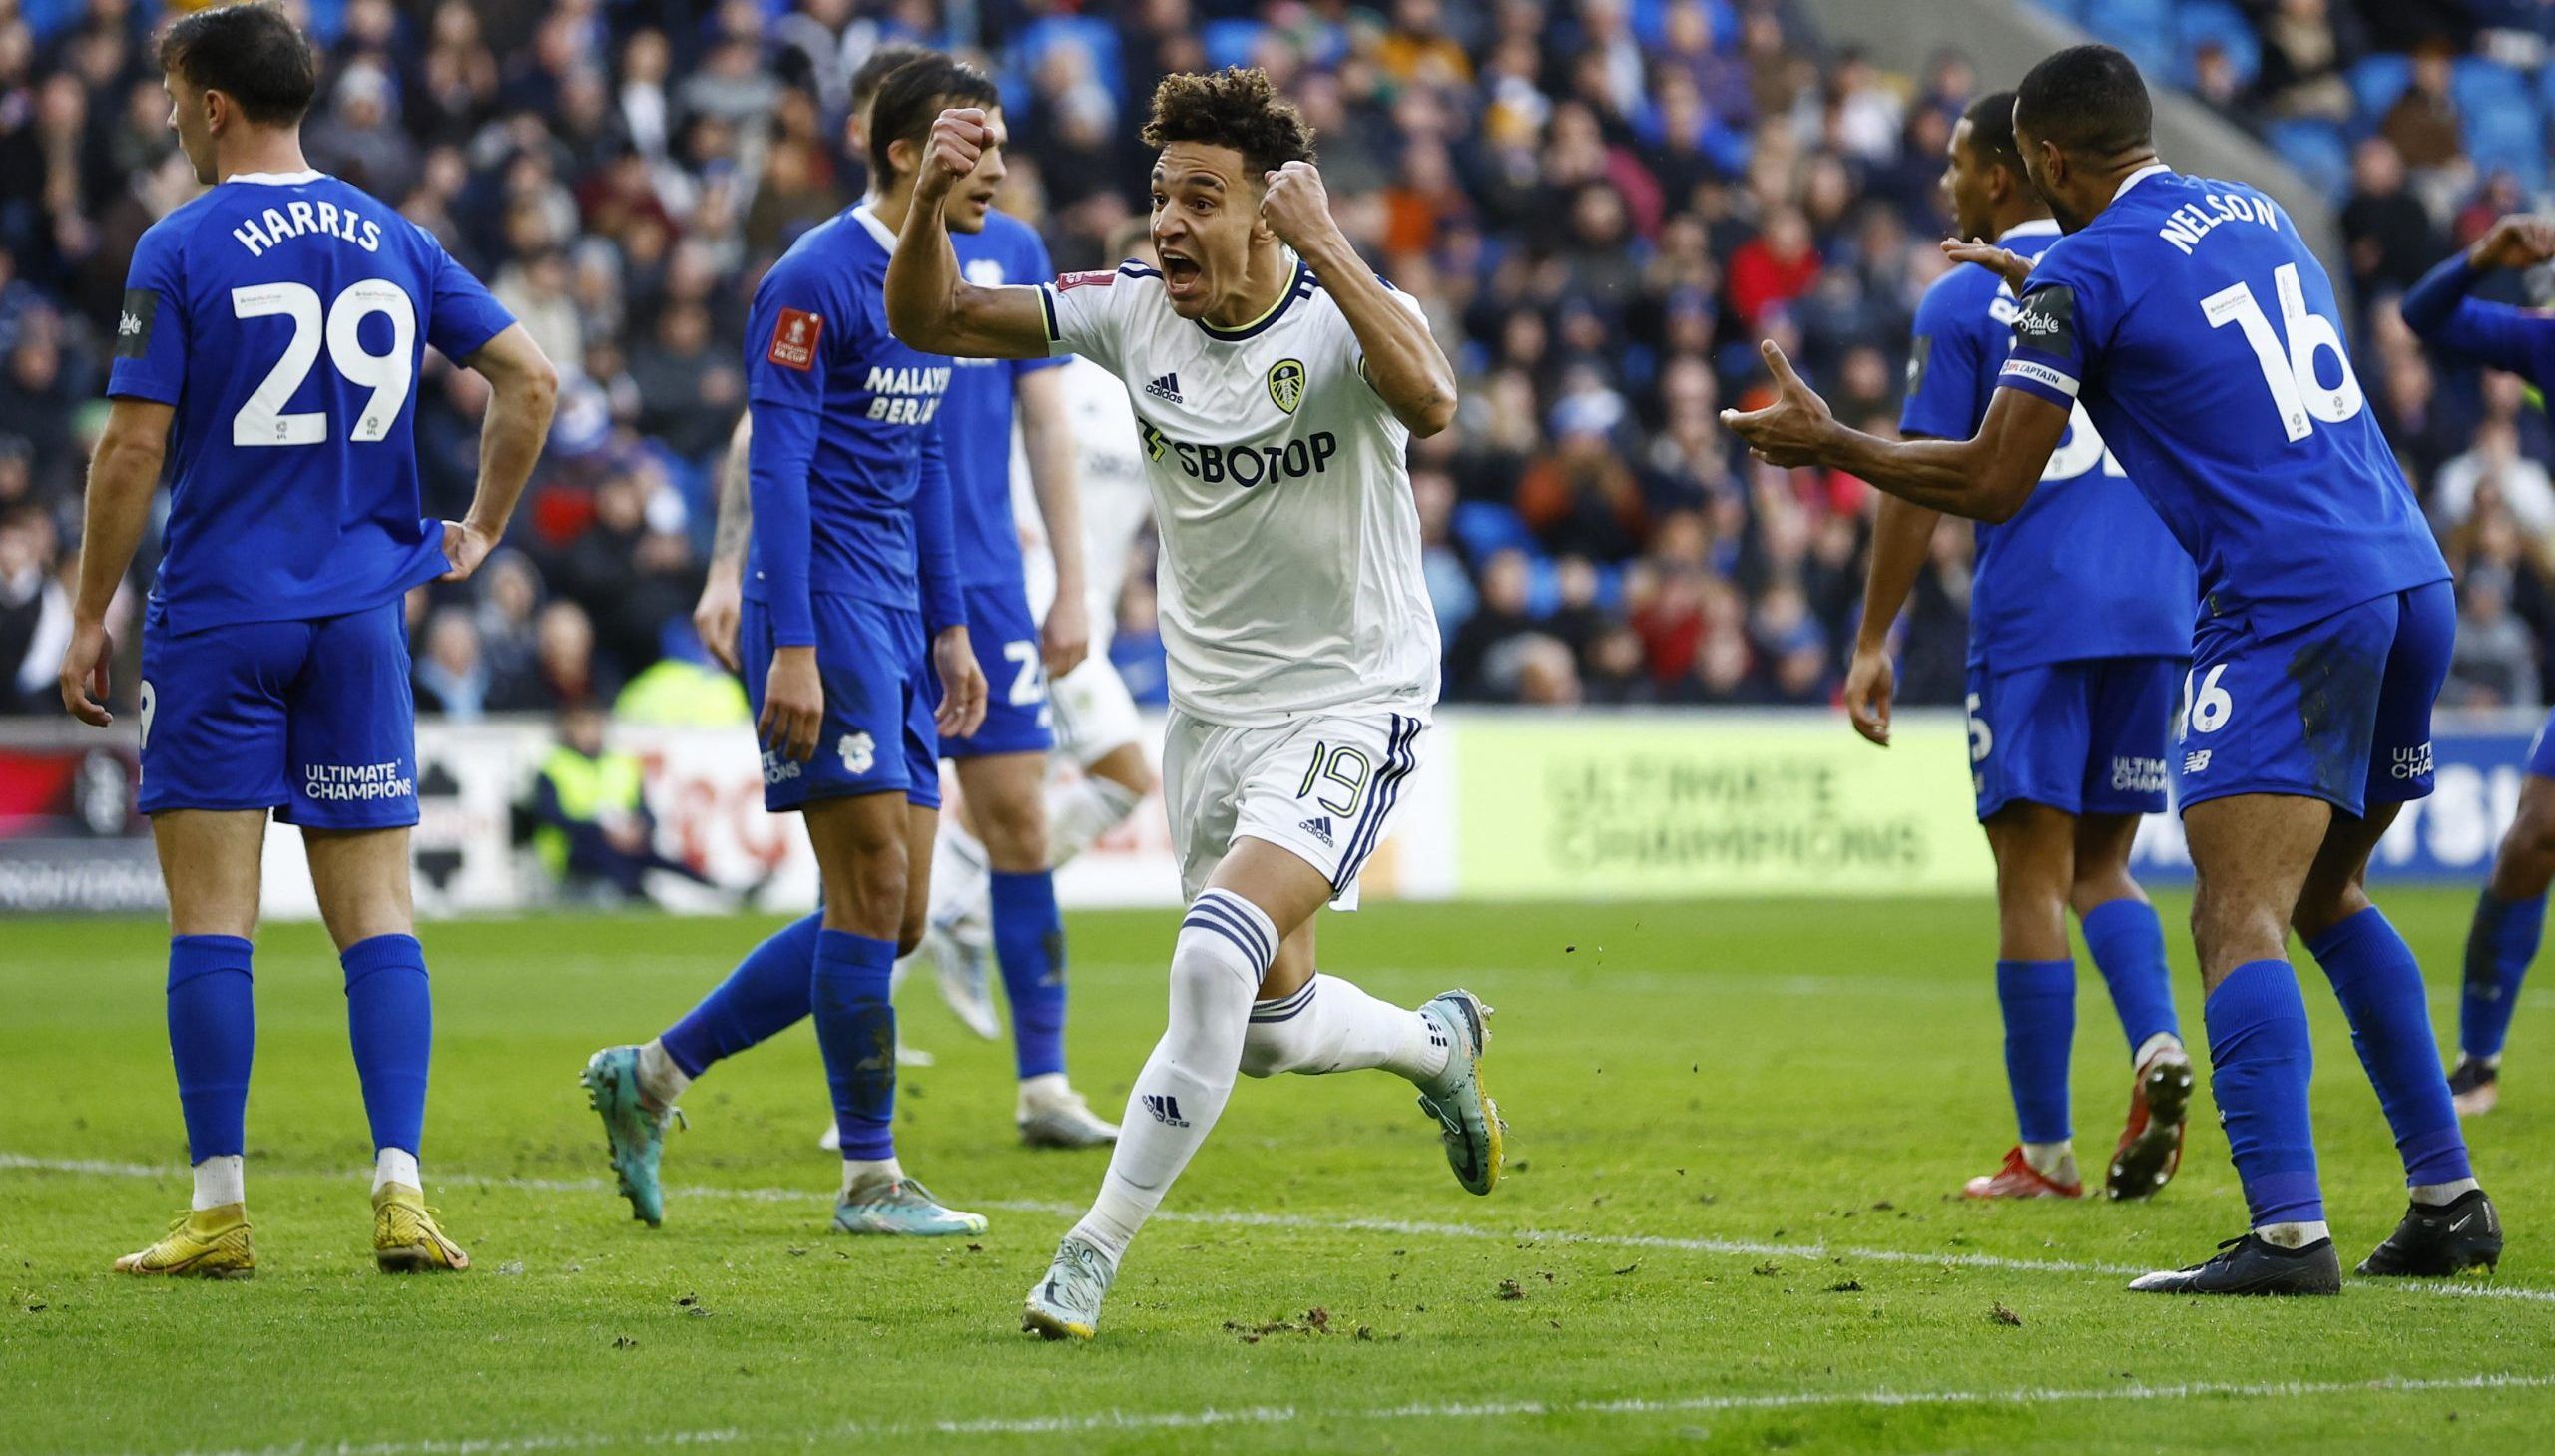 Leeds United's Rodrigo celebrates scoring their first goal